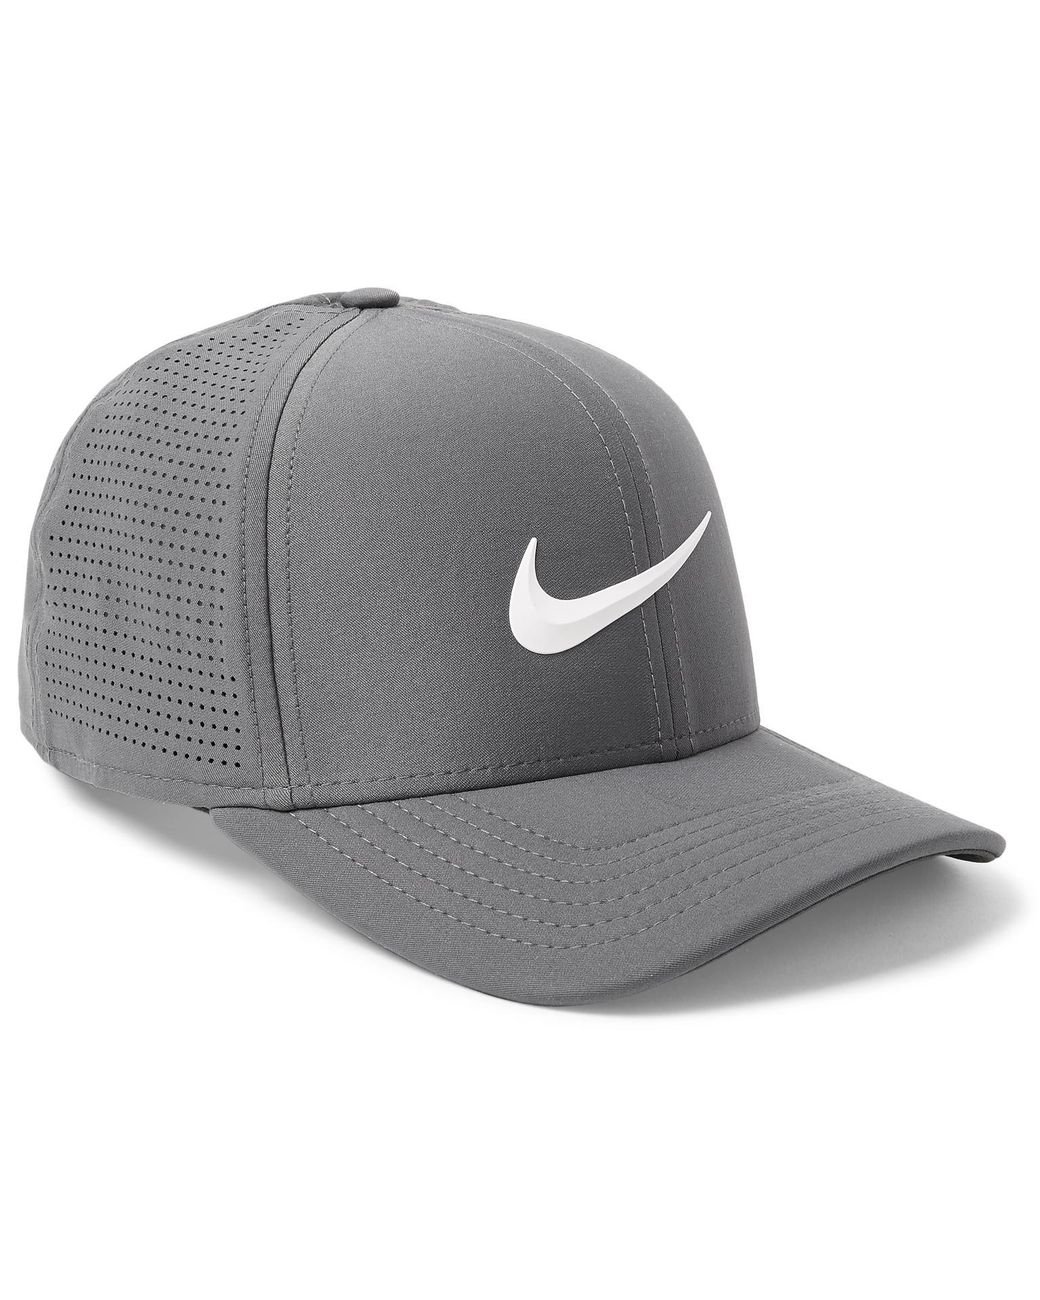 Nike Aerobill Classic 99 Dri-fit Golf Cap in Gray for Men Lyst